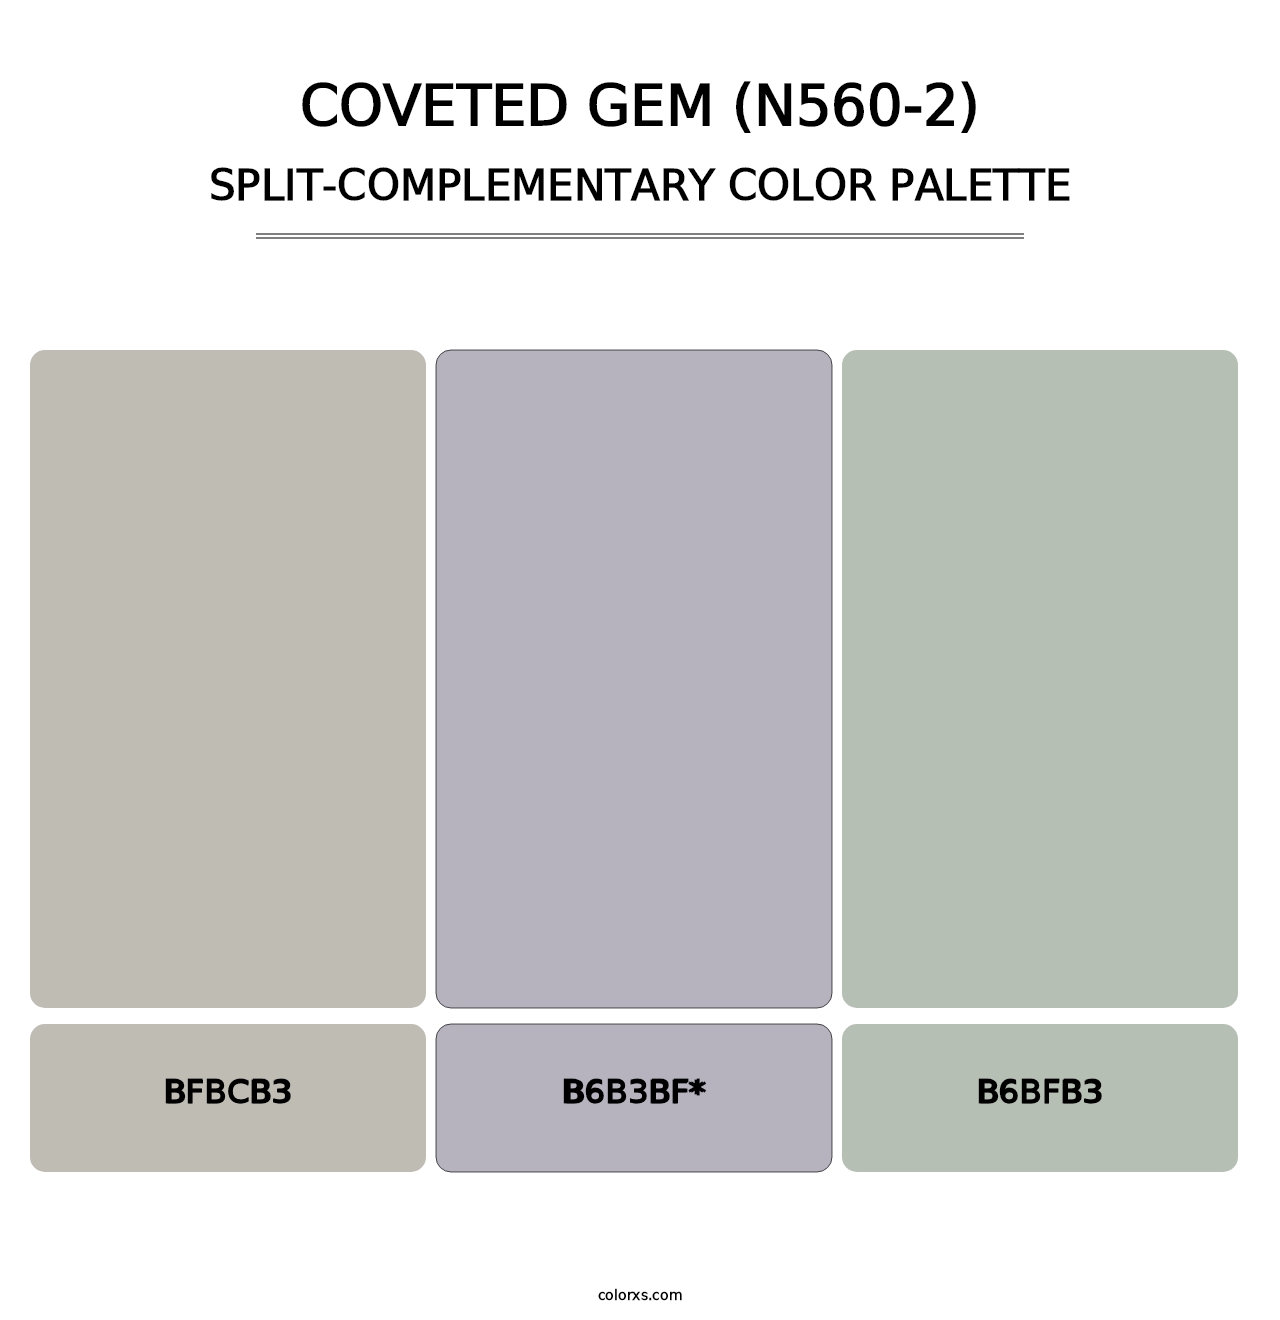 Coveted Gem (N560-2) - Split-Complementary Color Palette